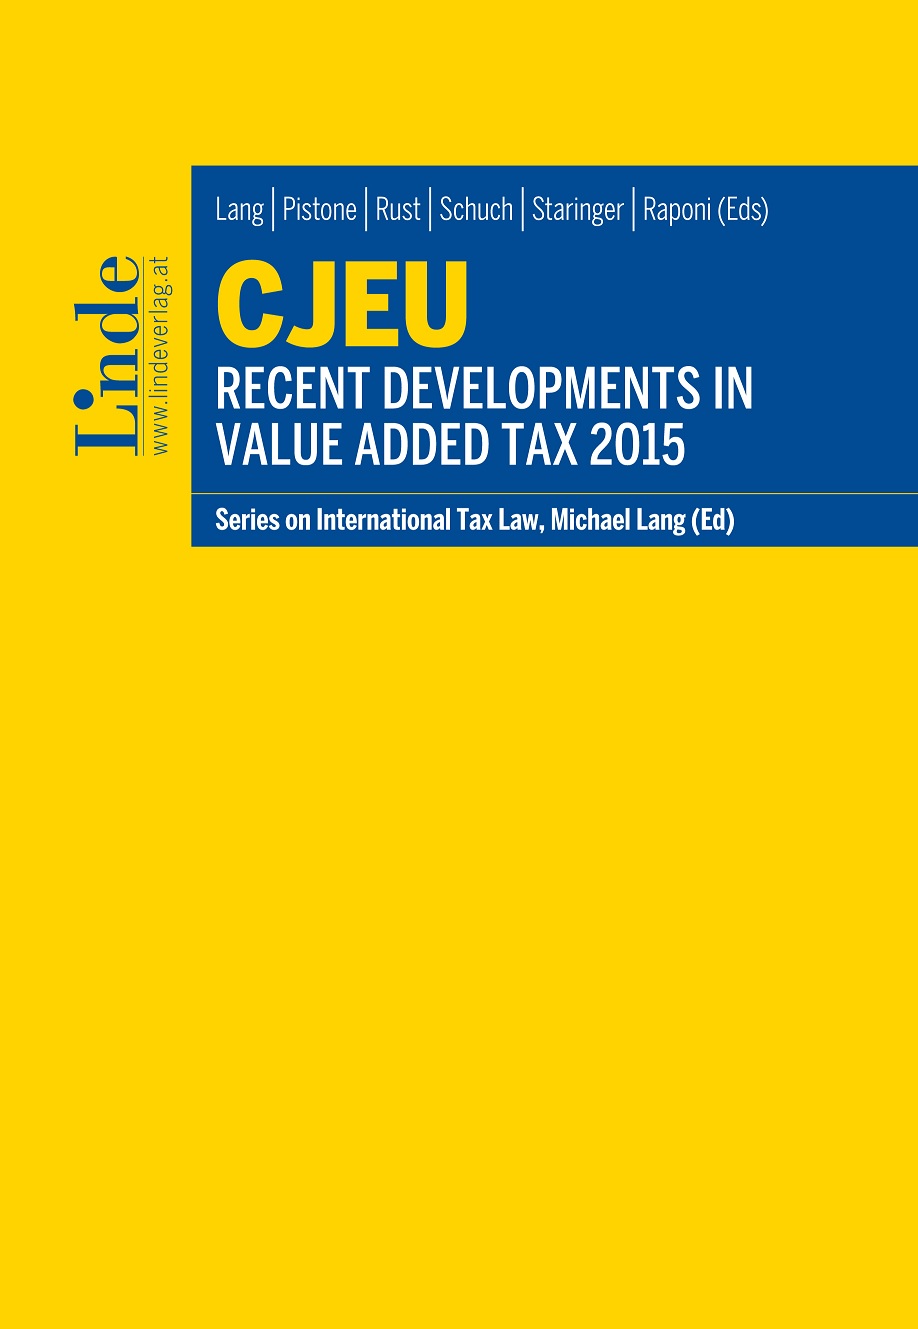 CJEU - Recent Developments in Value Added Tax 2015